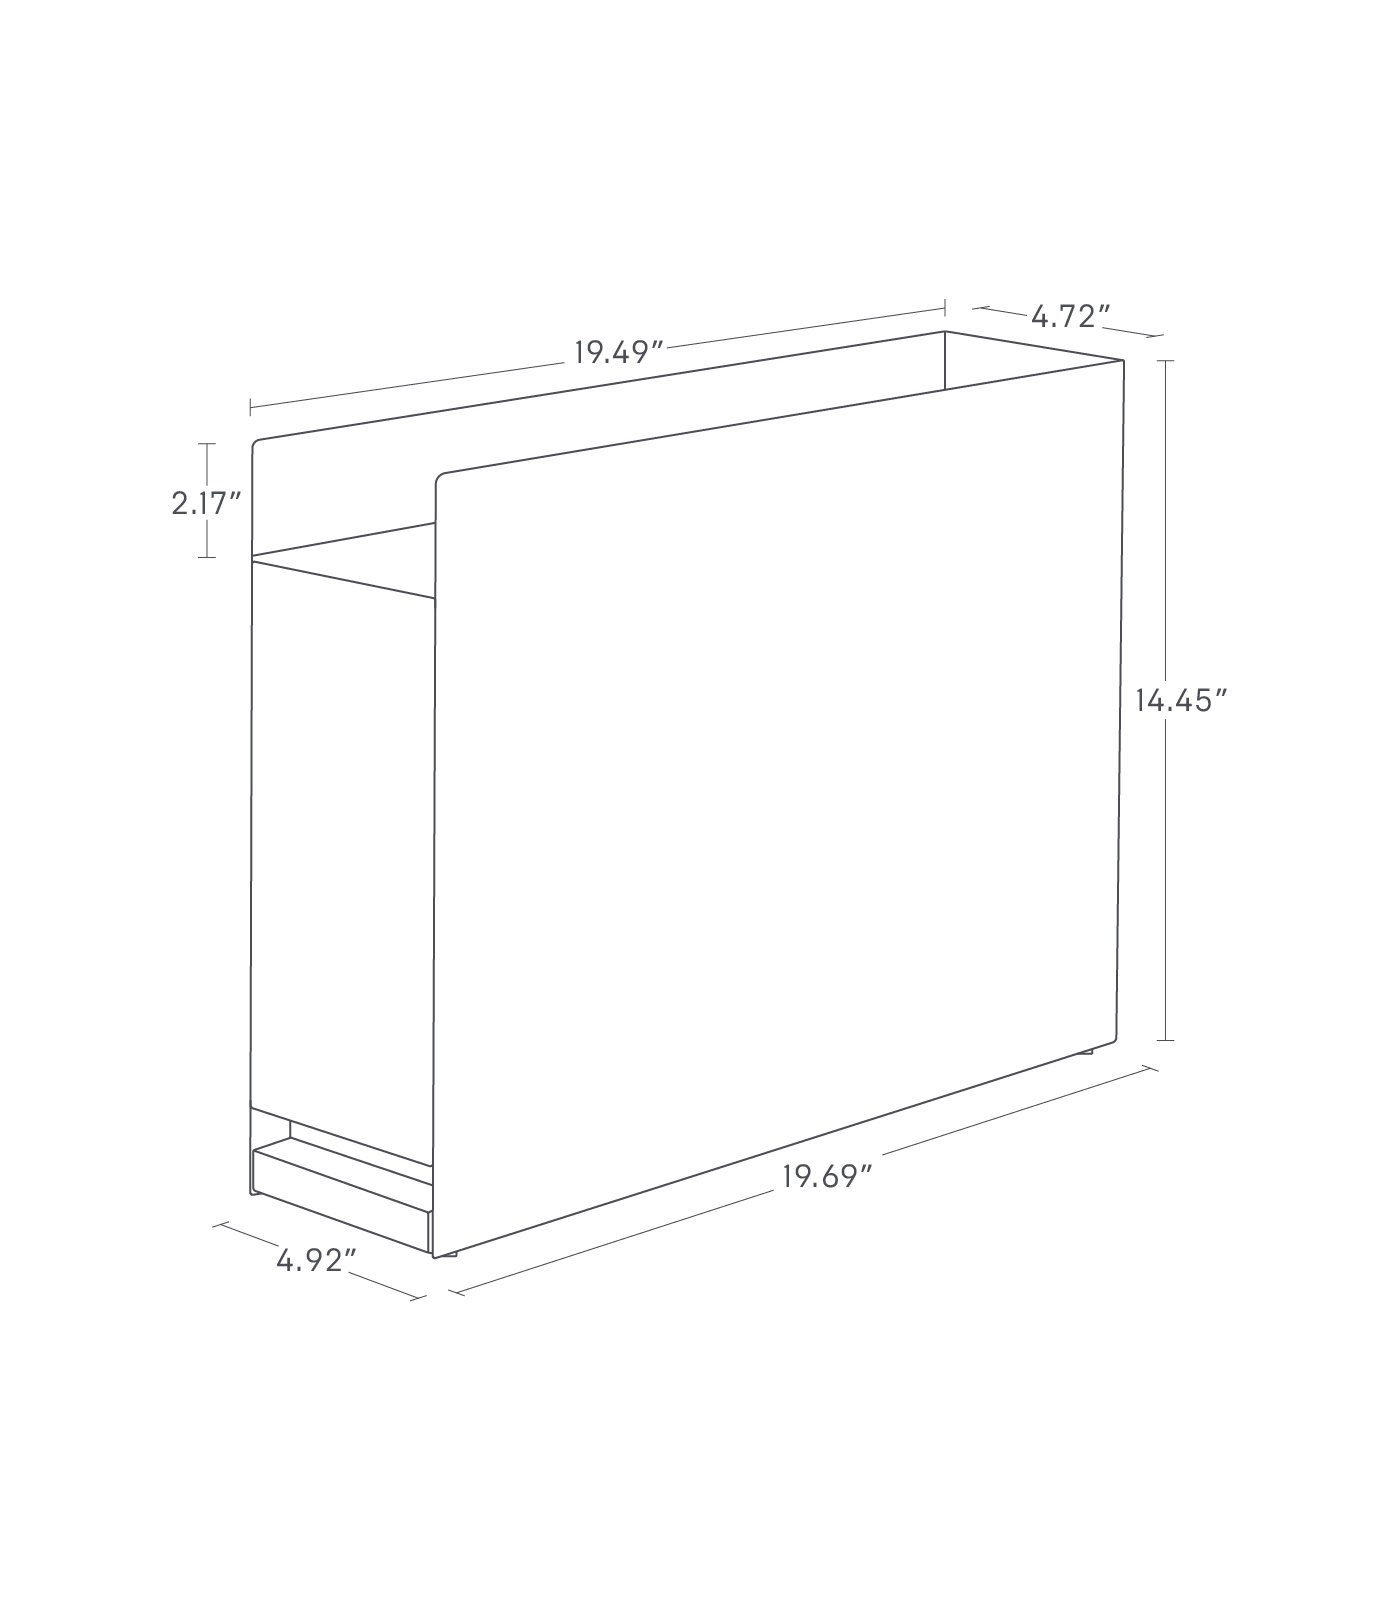 Dimension image for Sliding Drawer Seasoning Rackon a white background showinglength of 4.92